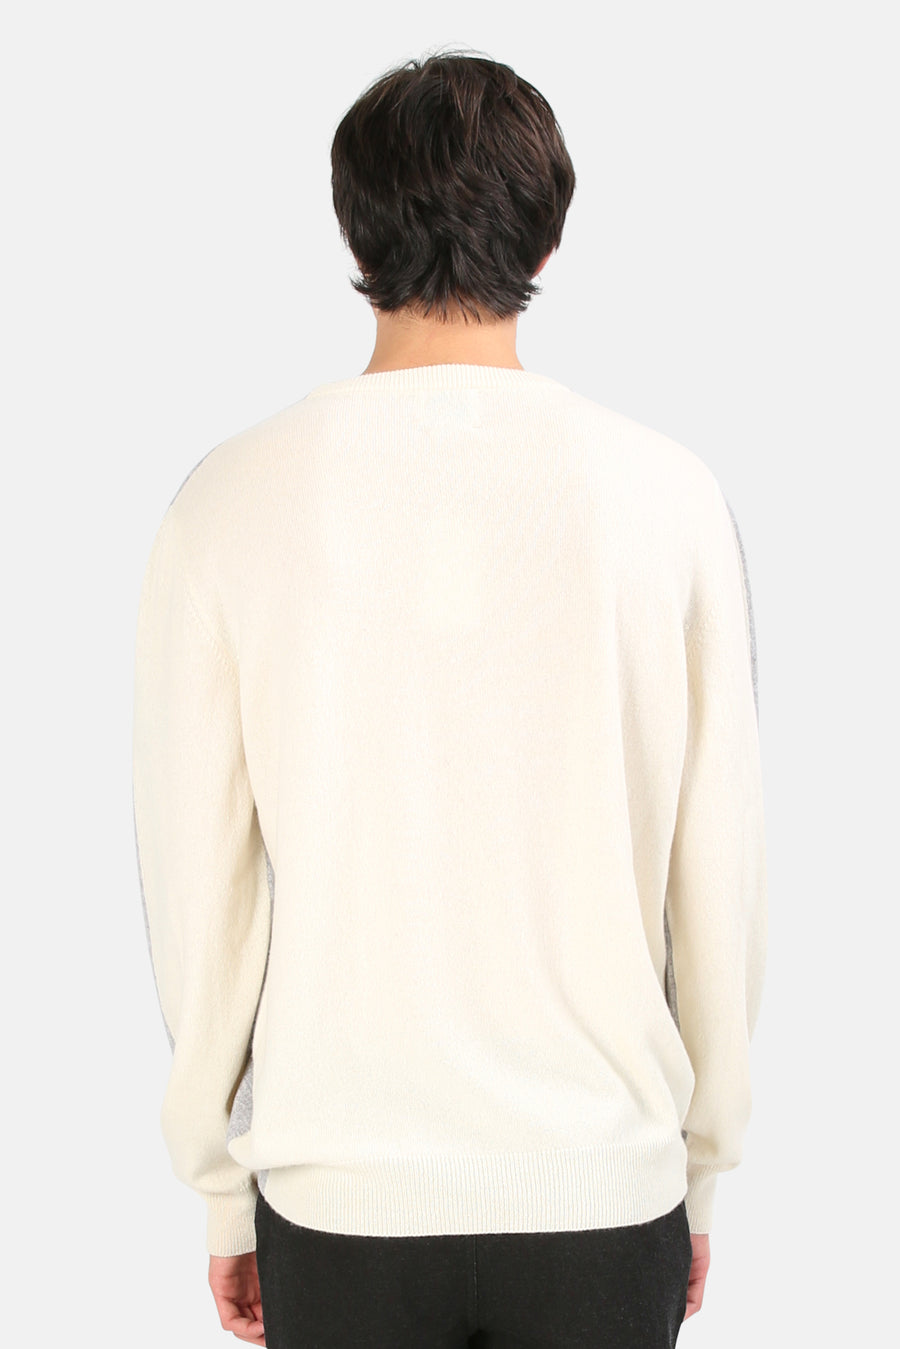 Two Tone Crewneck Cashmere Sweater Grey/White - blueandcream